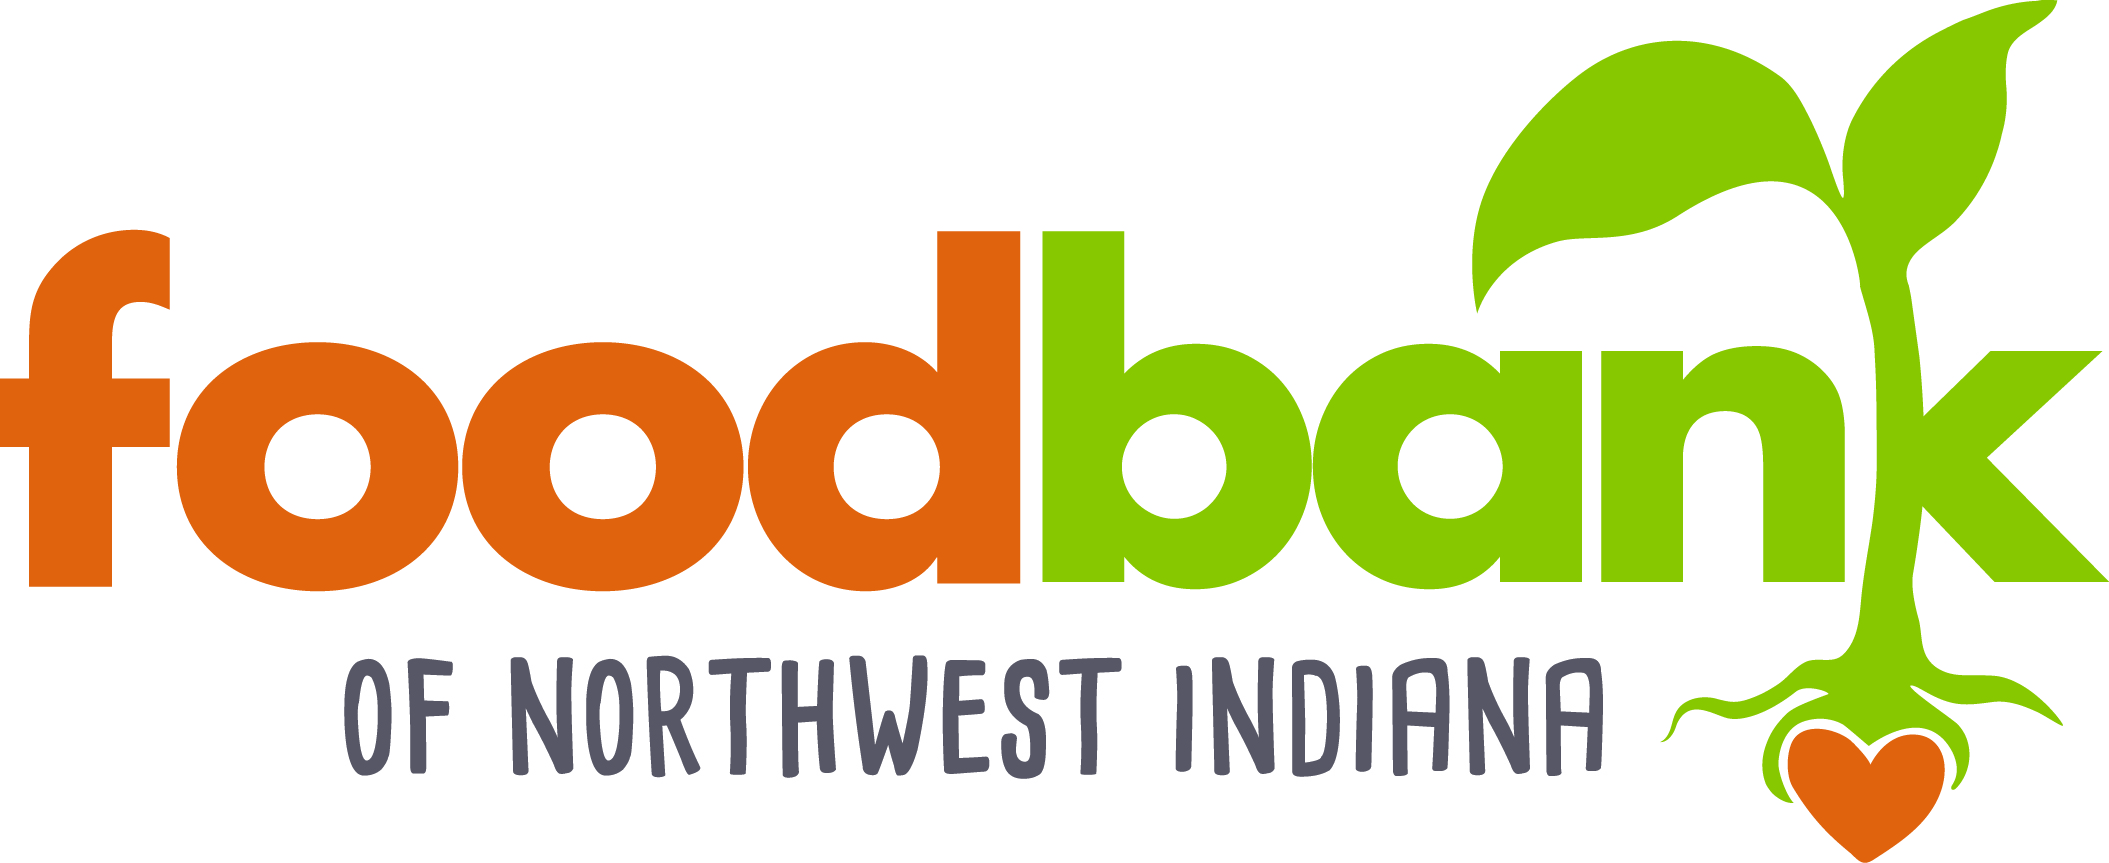 Image for Foodbank of Northwest Indiana